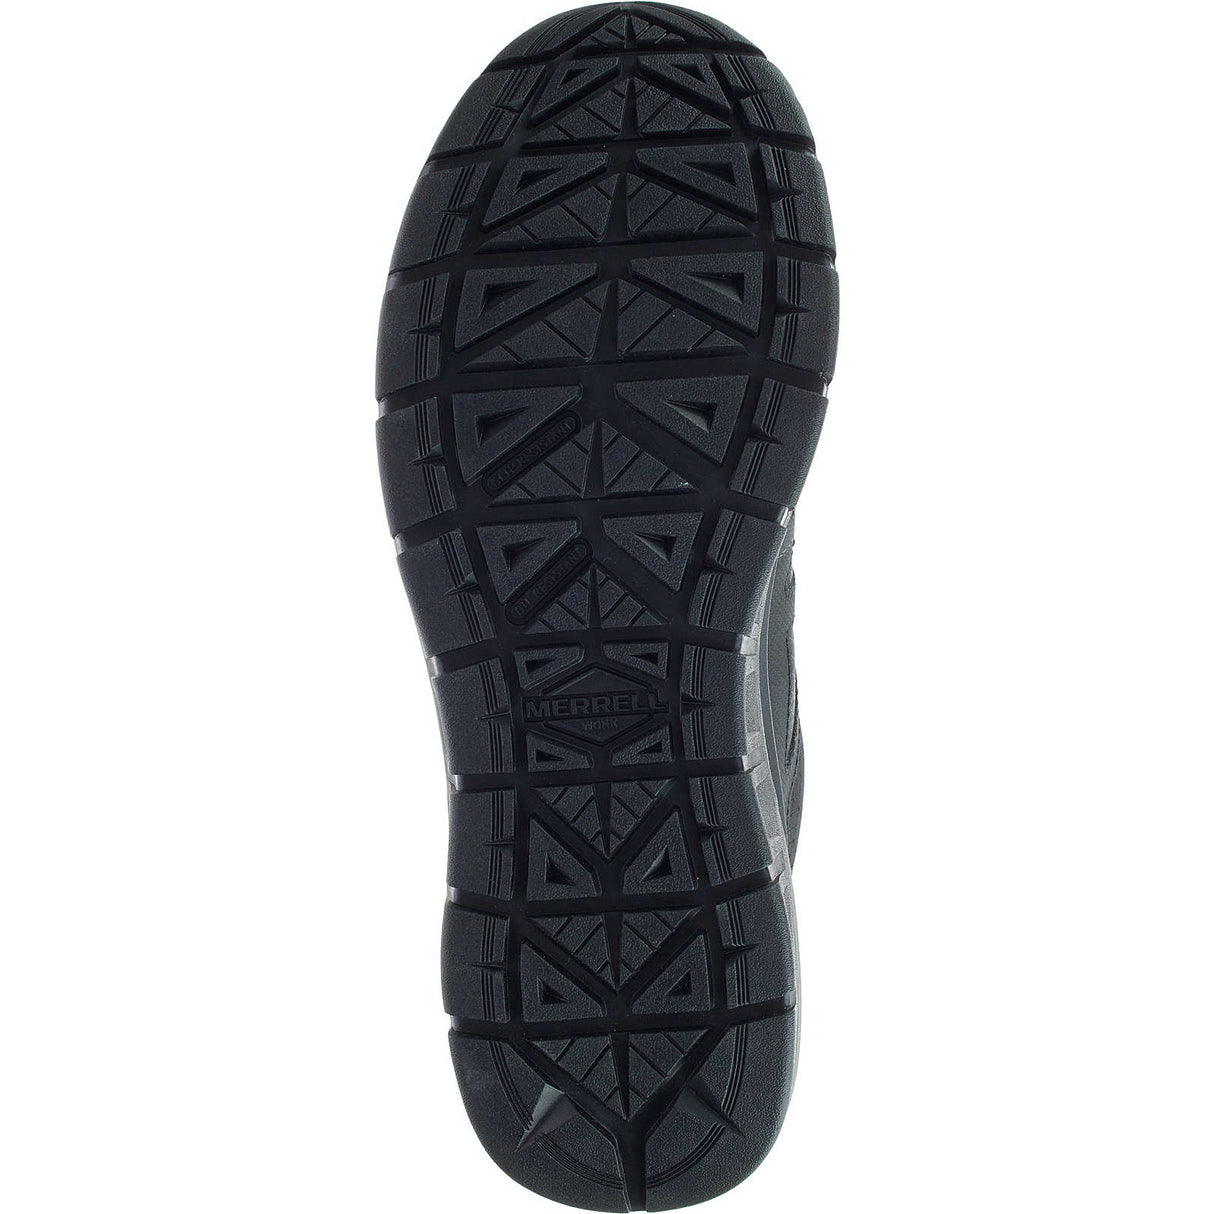 Fullbench Speed Men's Carbon-Fiber Work Shoes Black-Men's Work Shoes-Merrell-Steel Toes